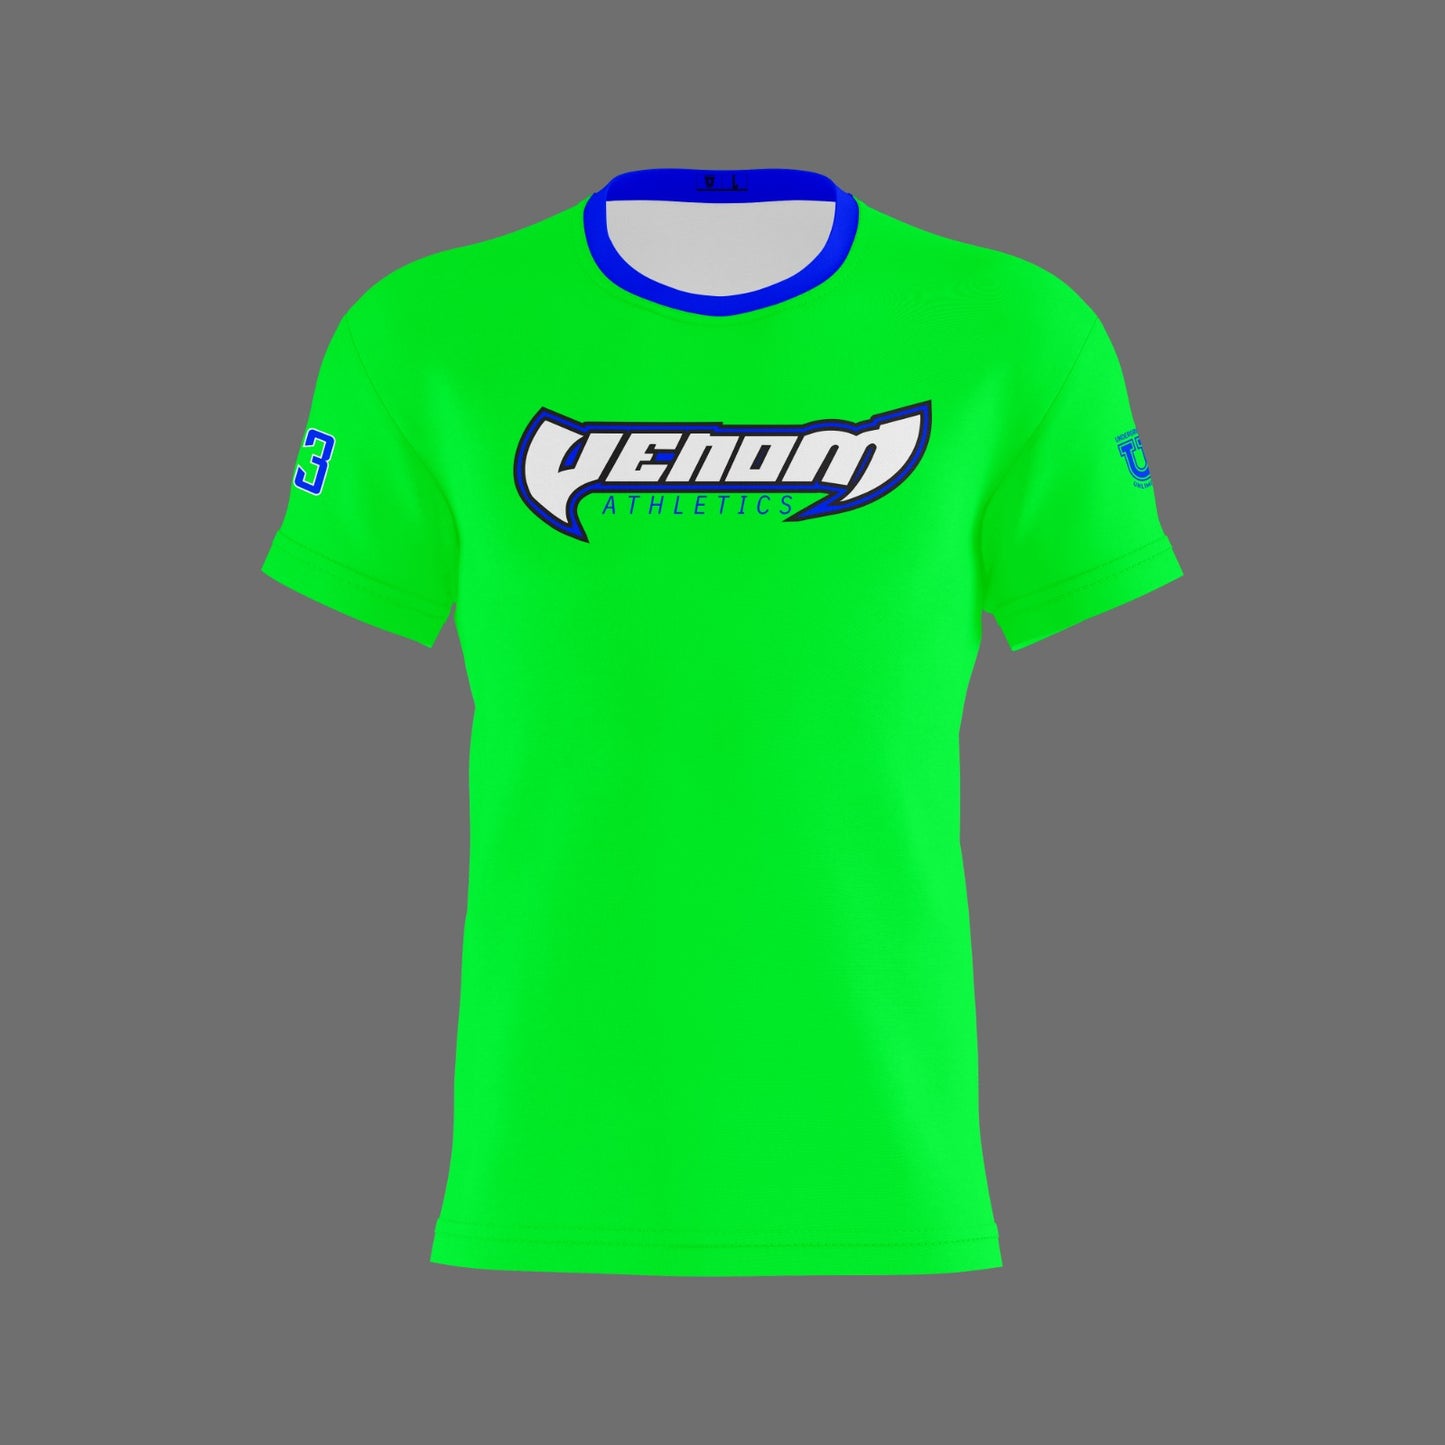 Venom Athletics Dri Tech T-Shirt ~ Bright Green